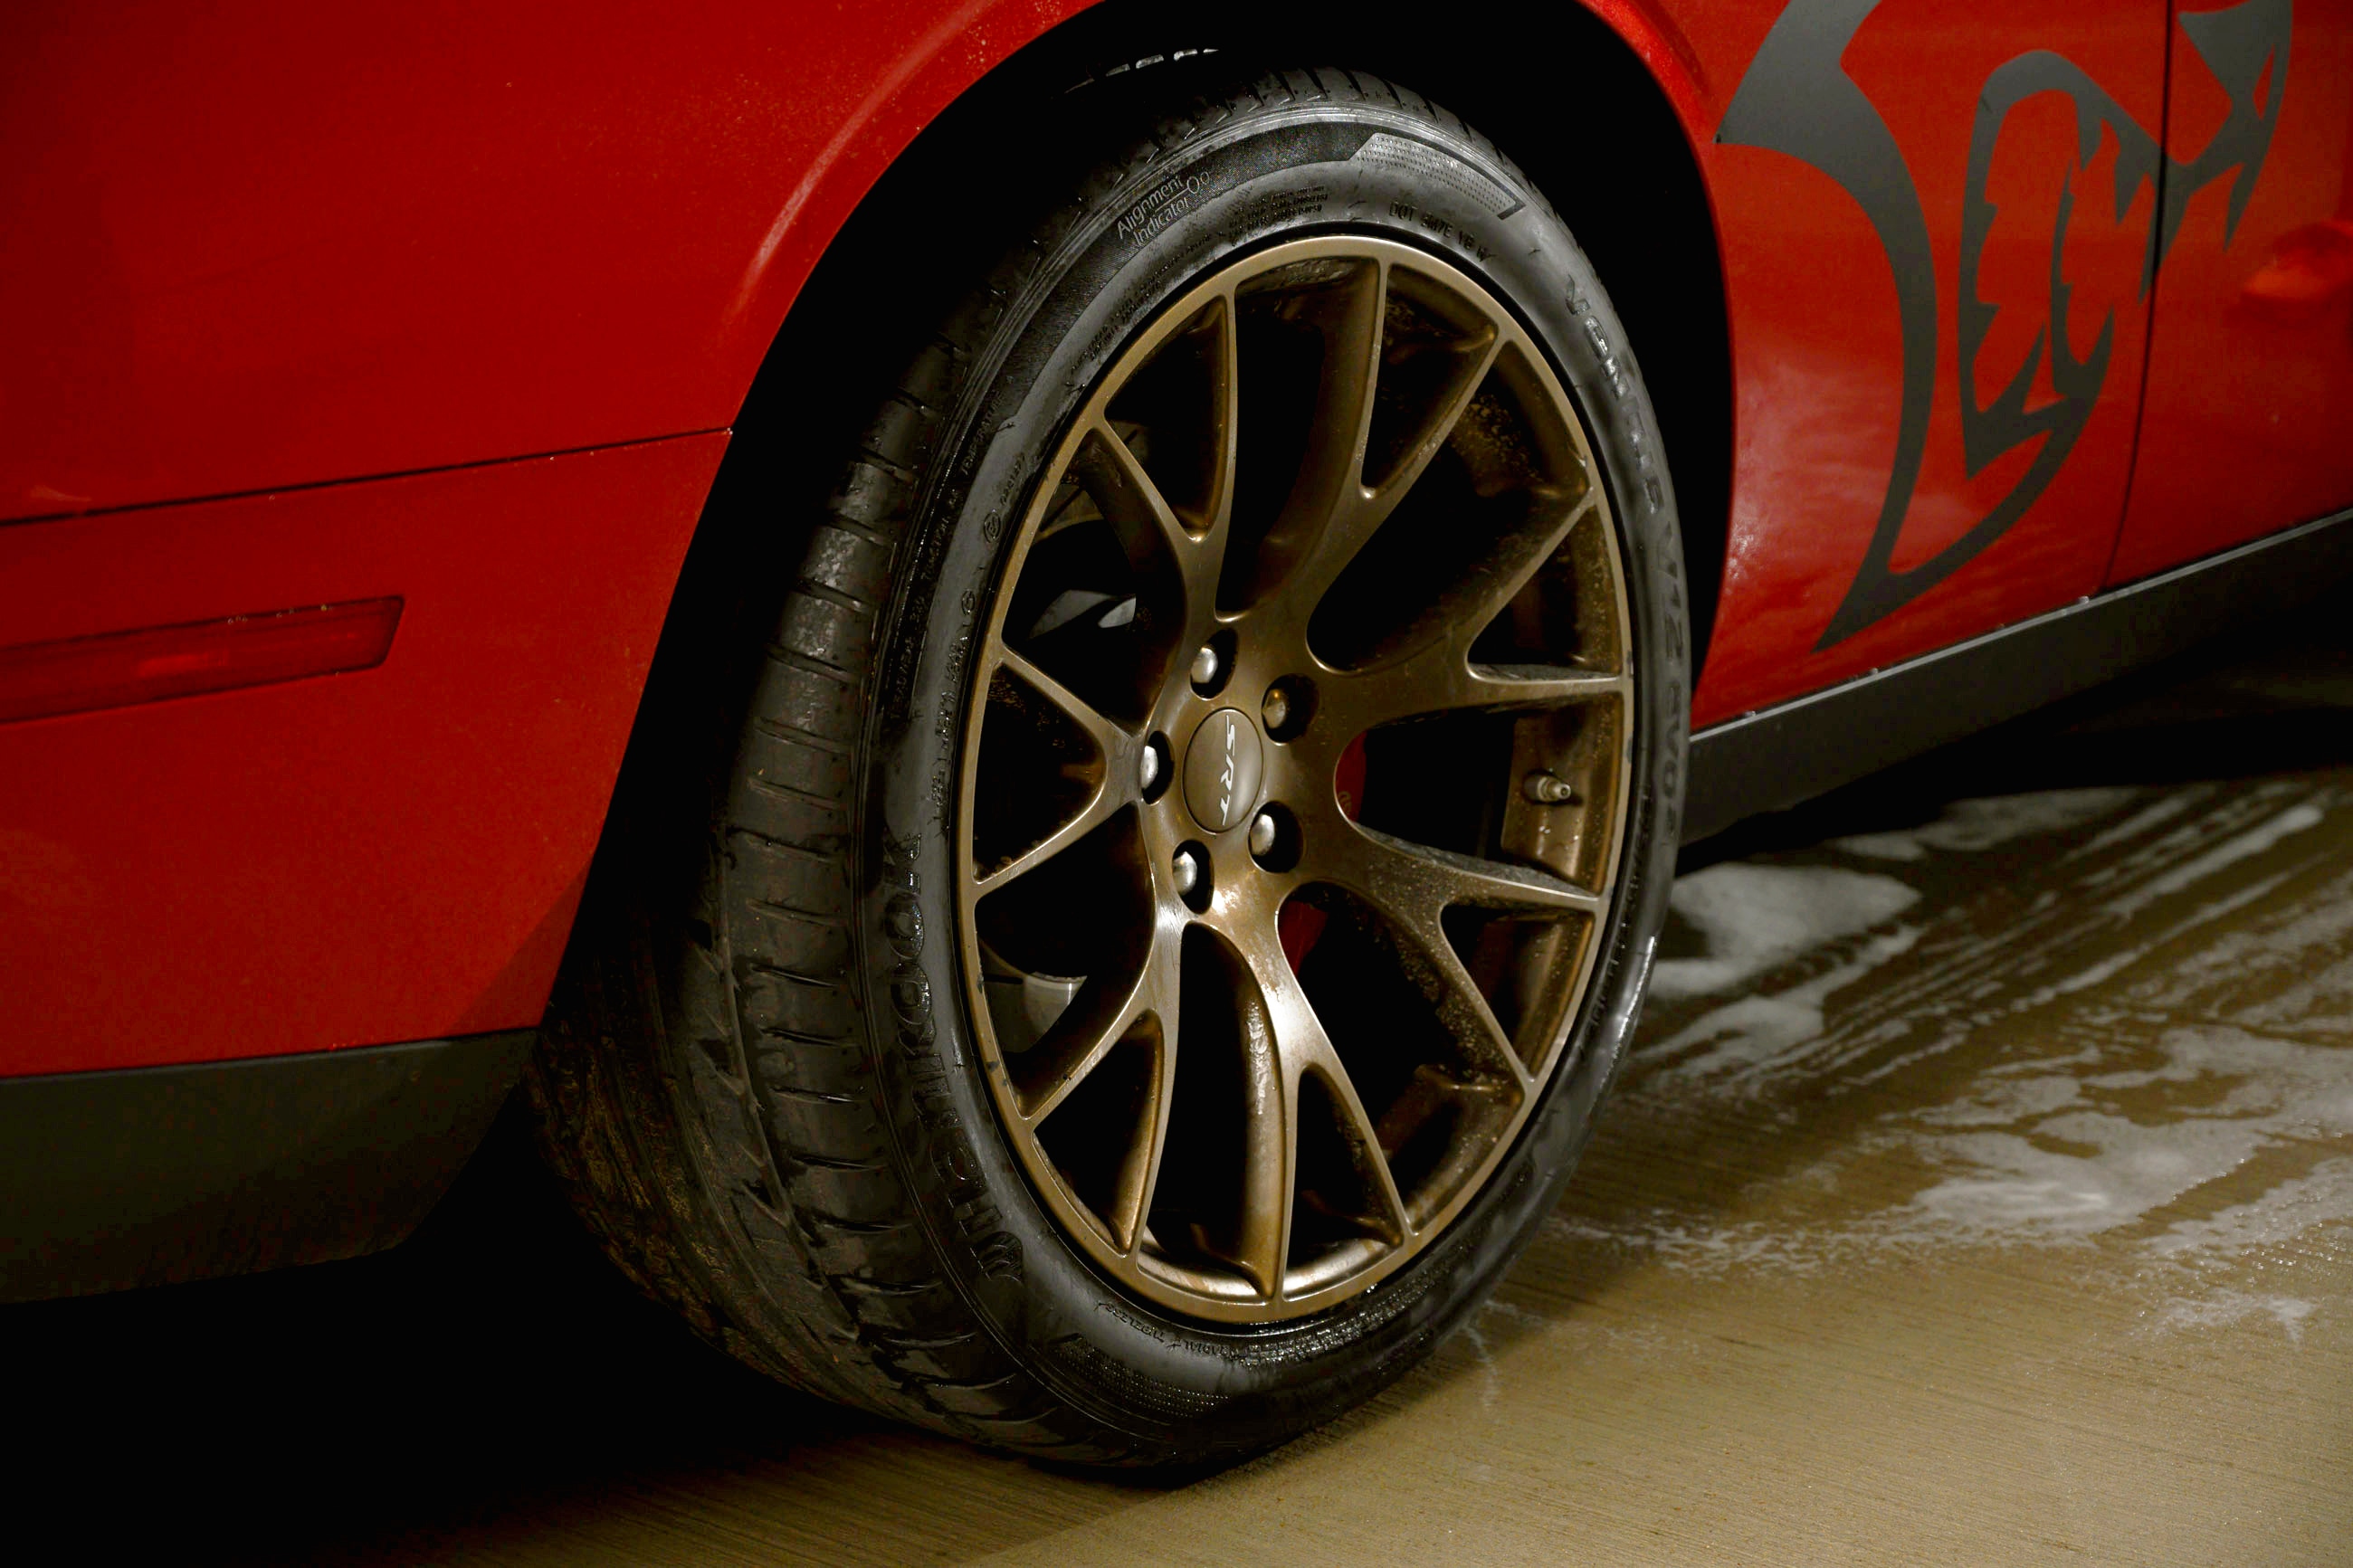 Black Magic Tire wet 23-fl oz Car Exterior Wash in the Car